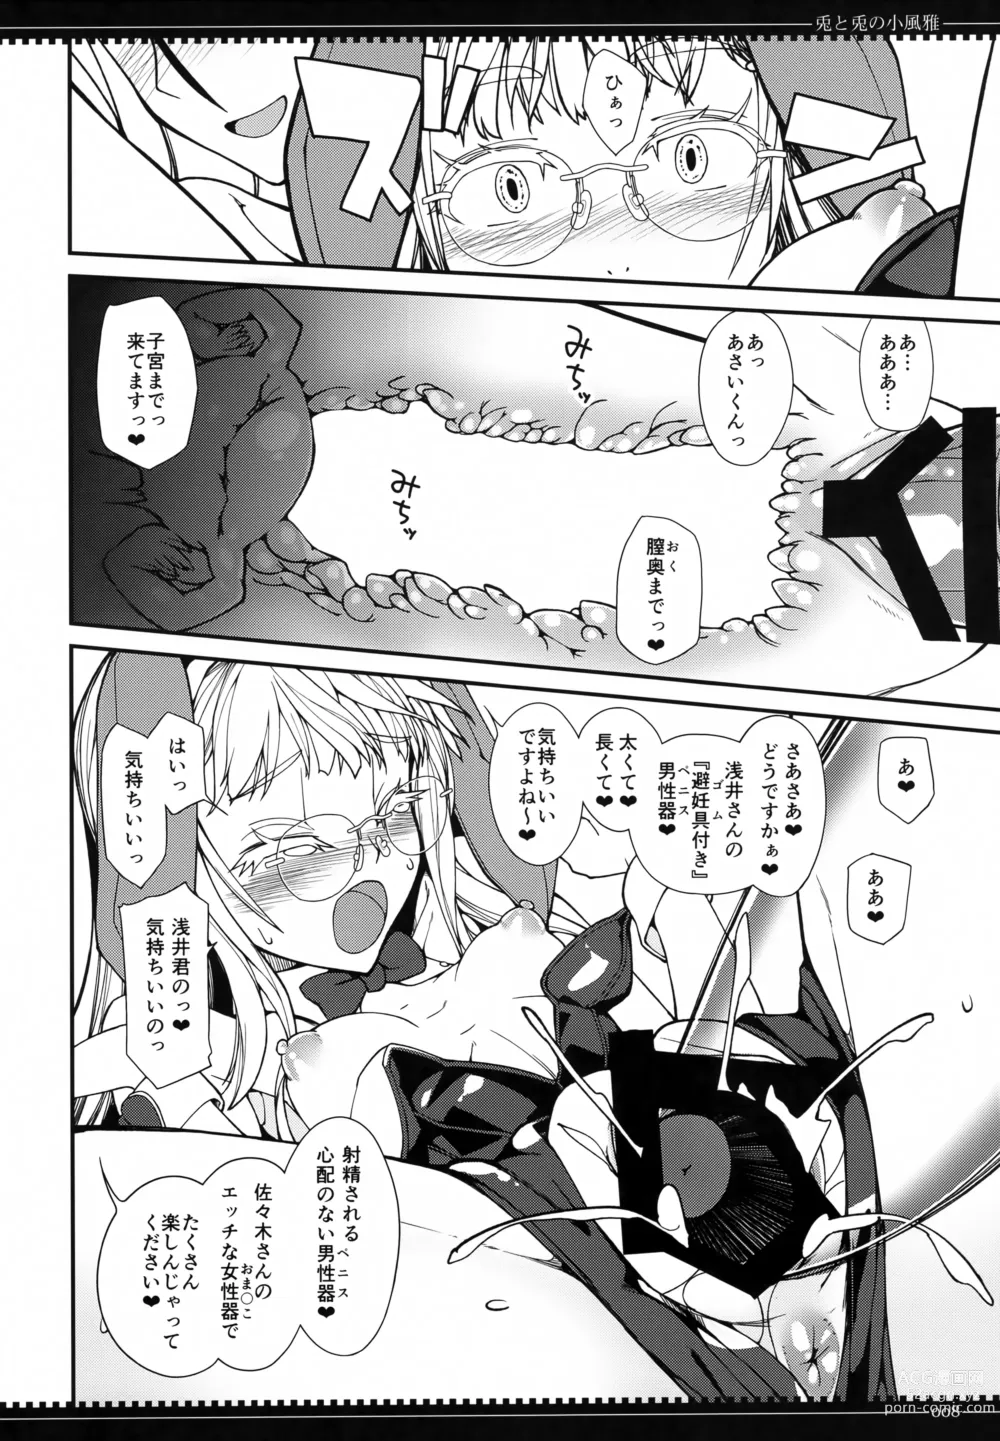 Page 7 of doujinshi Usagi to Usagi no Ko Fuuga